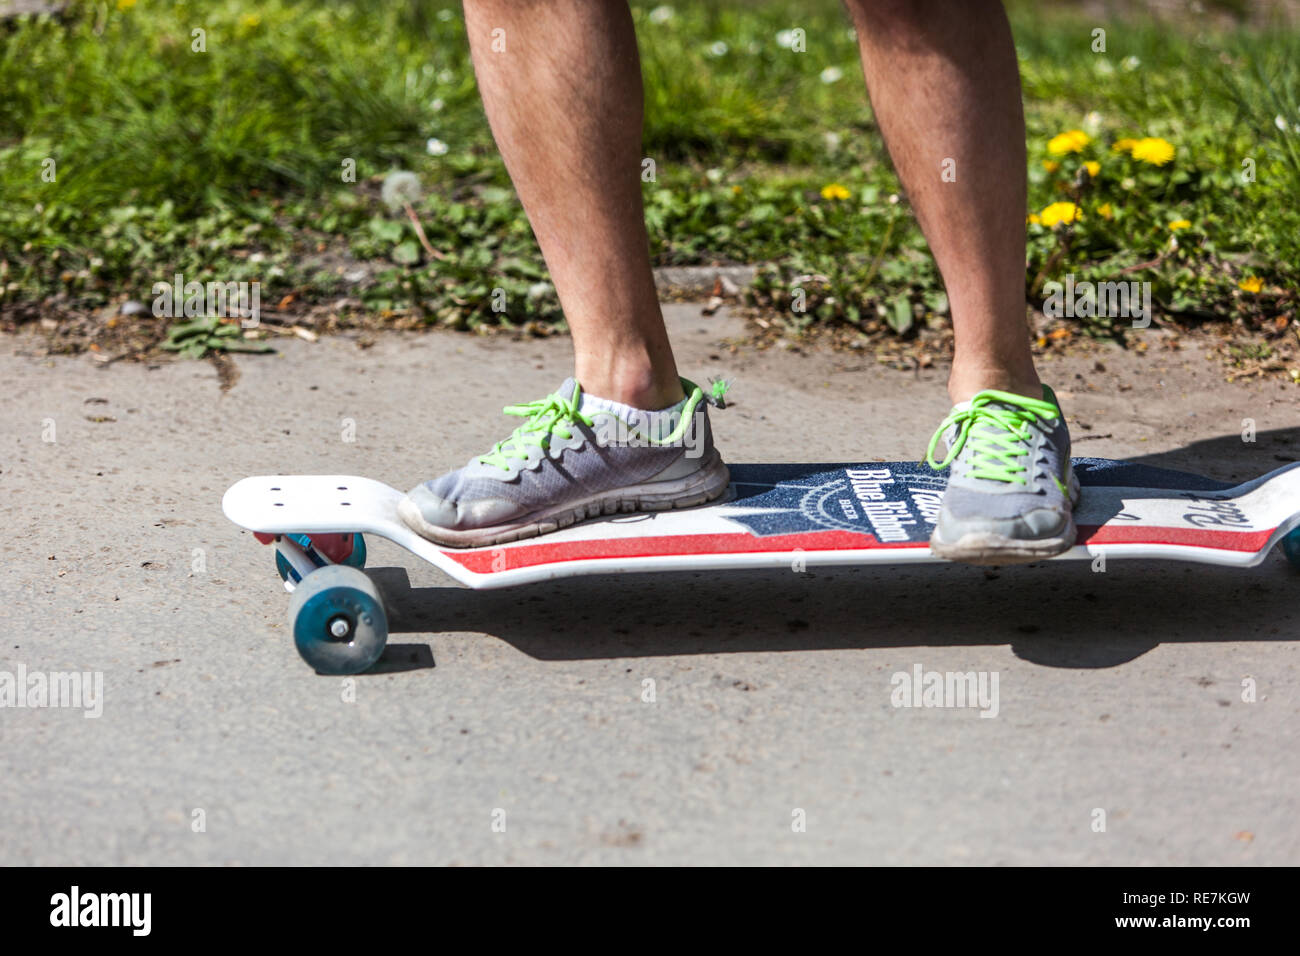 Male legs in sneakers on skateboard outdoors Stock Photo